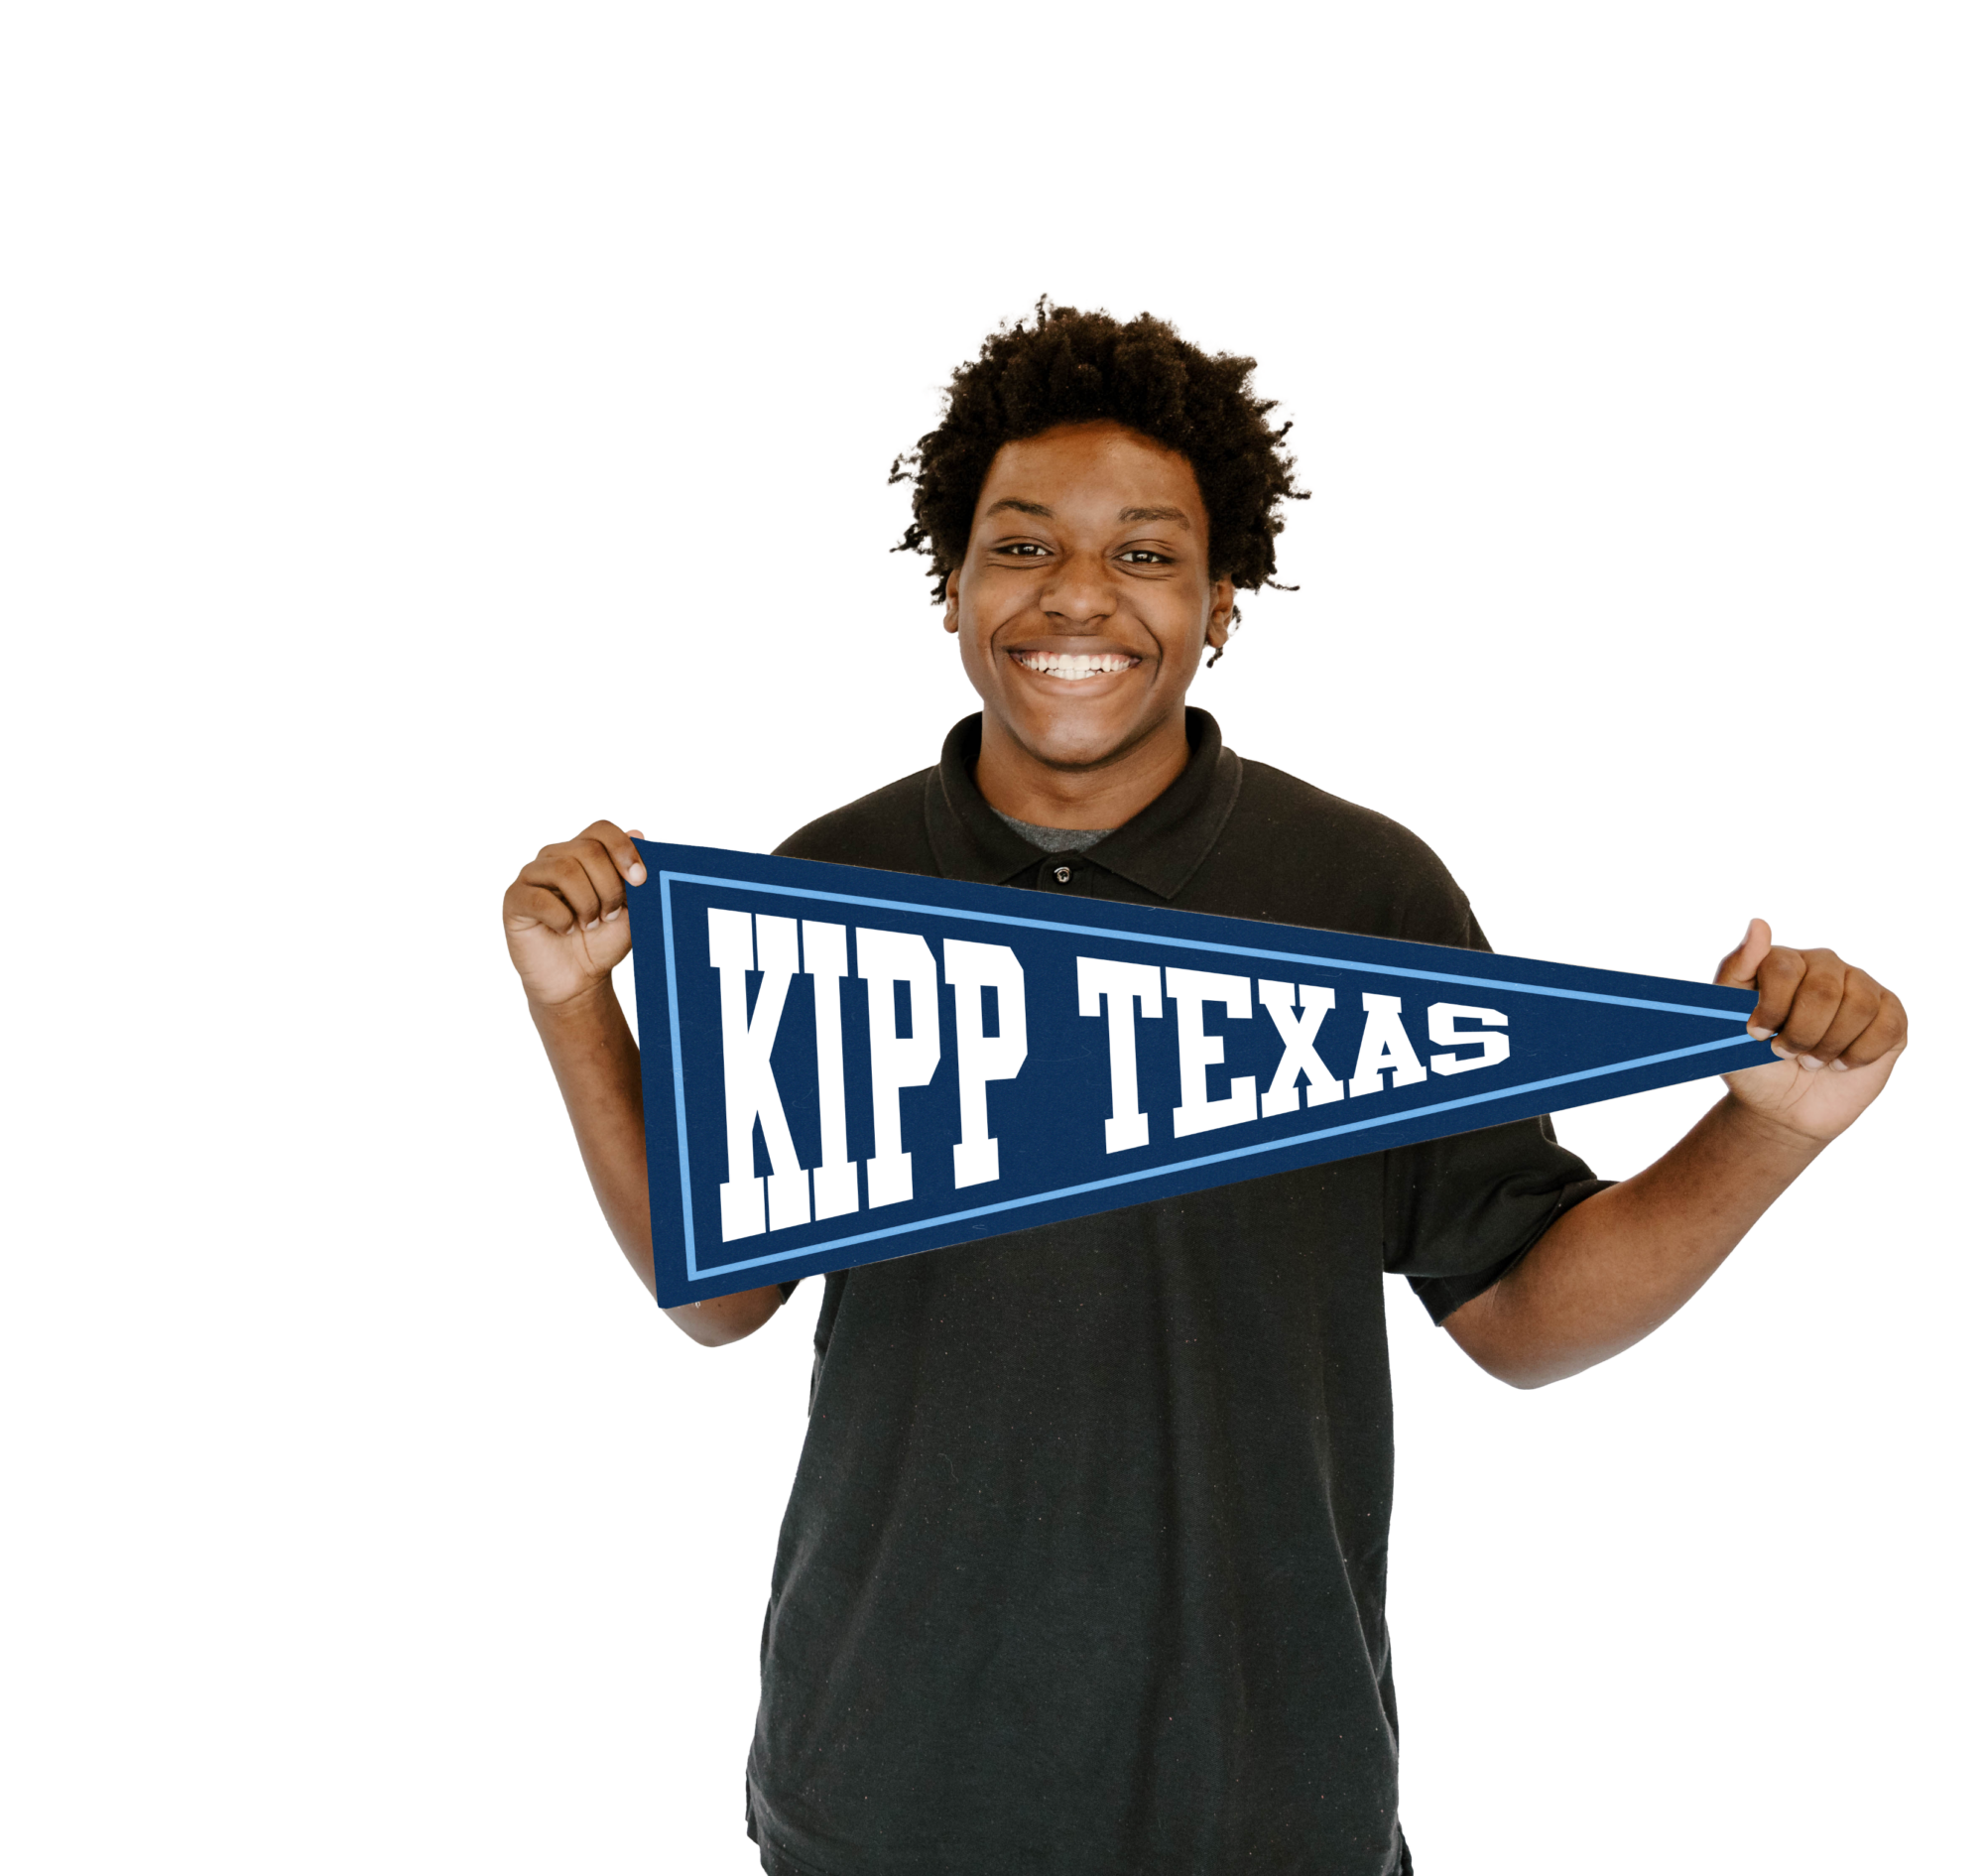 kipp-texas-high-school-student-holding-a-pennet